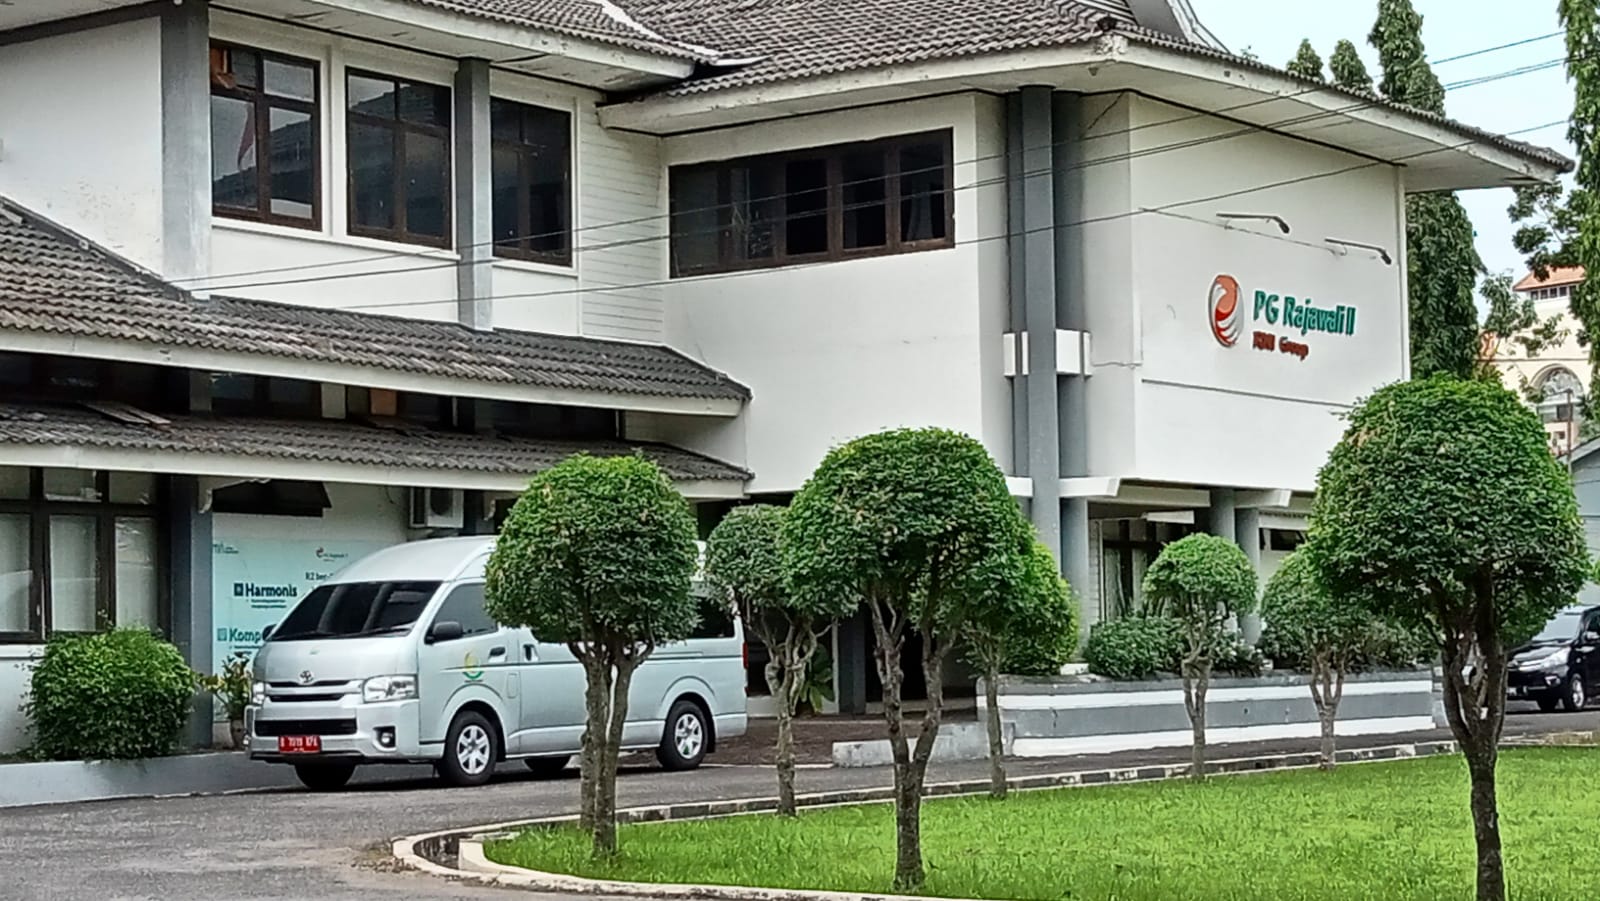 Breaking News: Kantor PG Rajawali Cirebon Digeledah Kejati Jabar, Waduh Ada Apa?